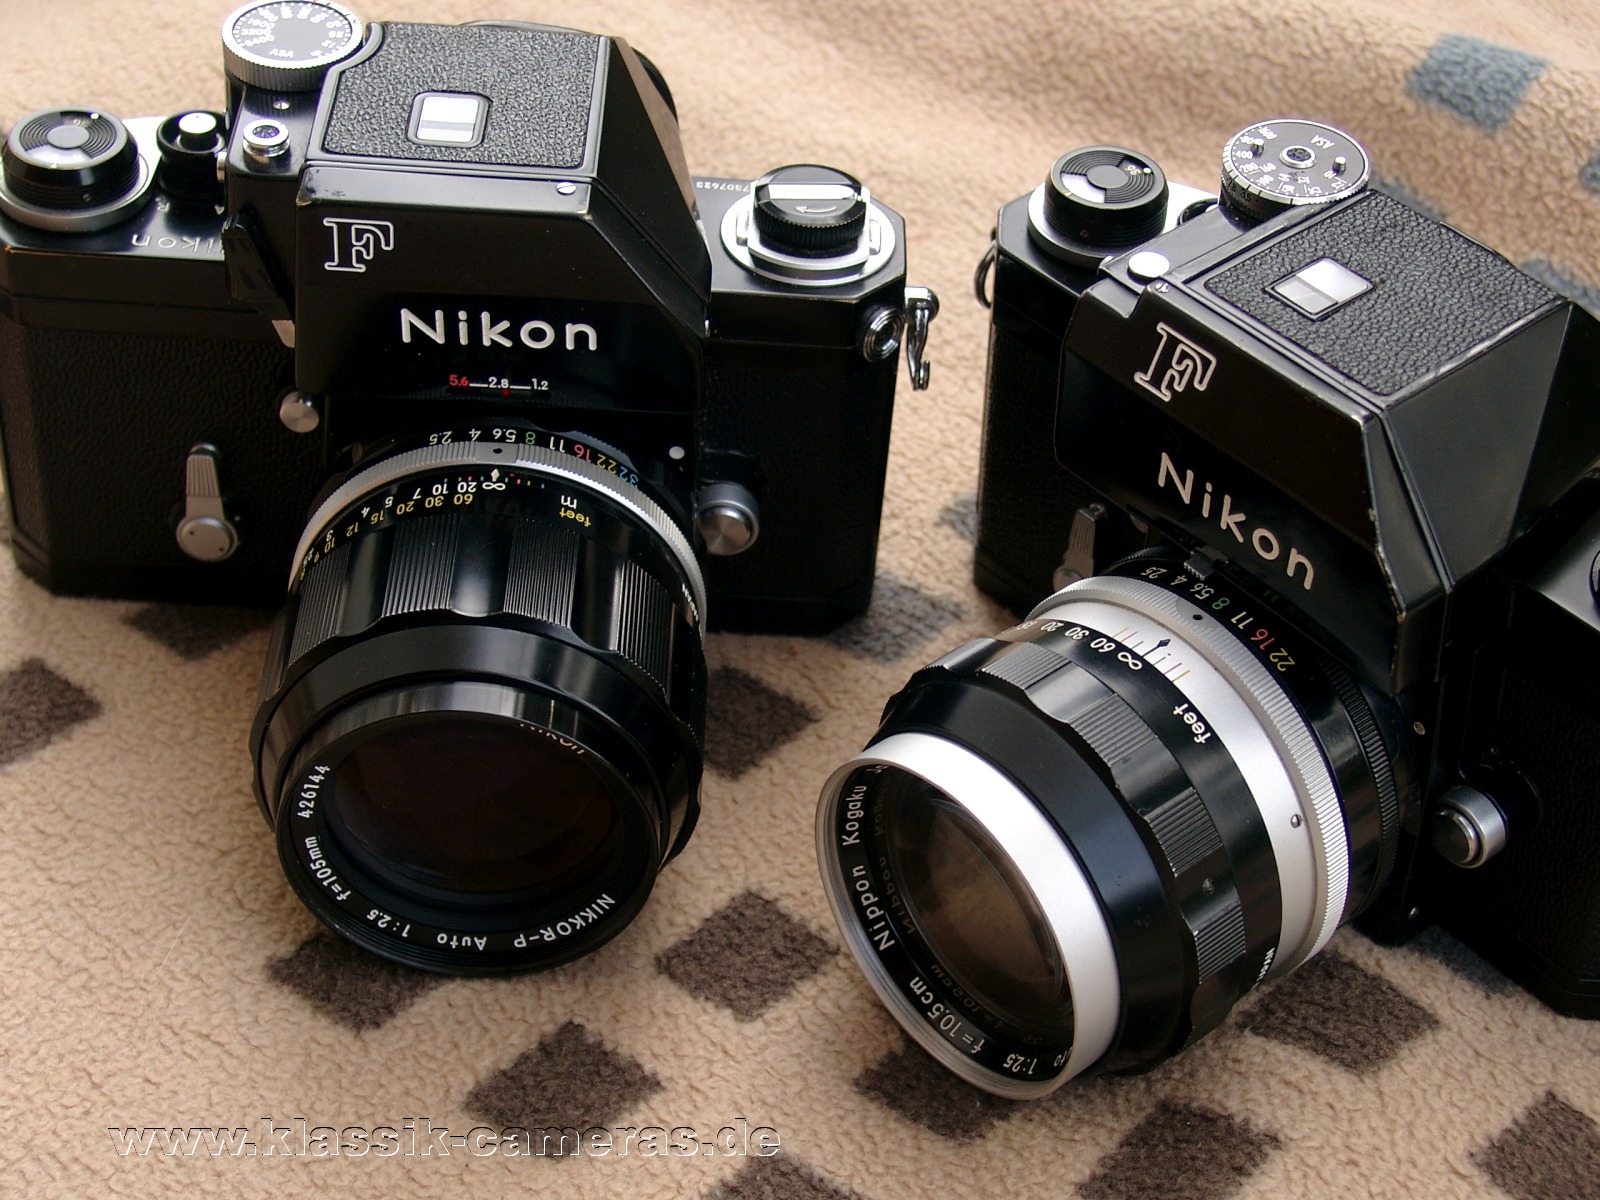 Nikon FTn/FTN and 105mm
              lenses